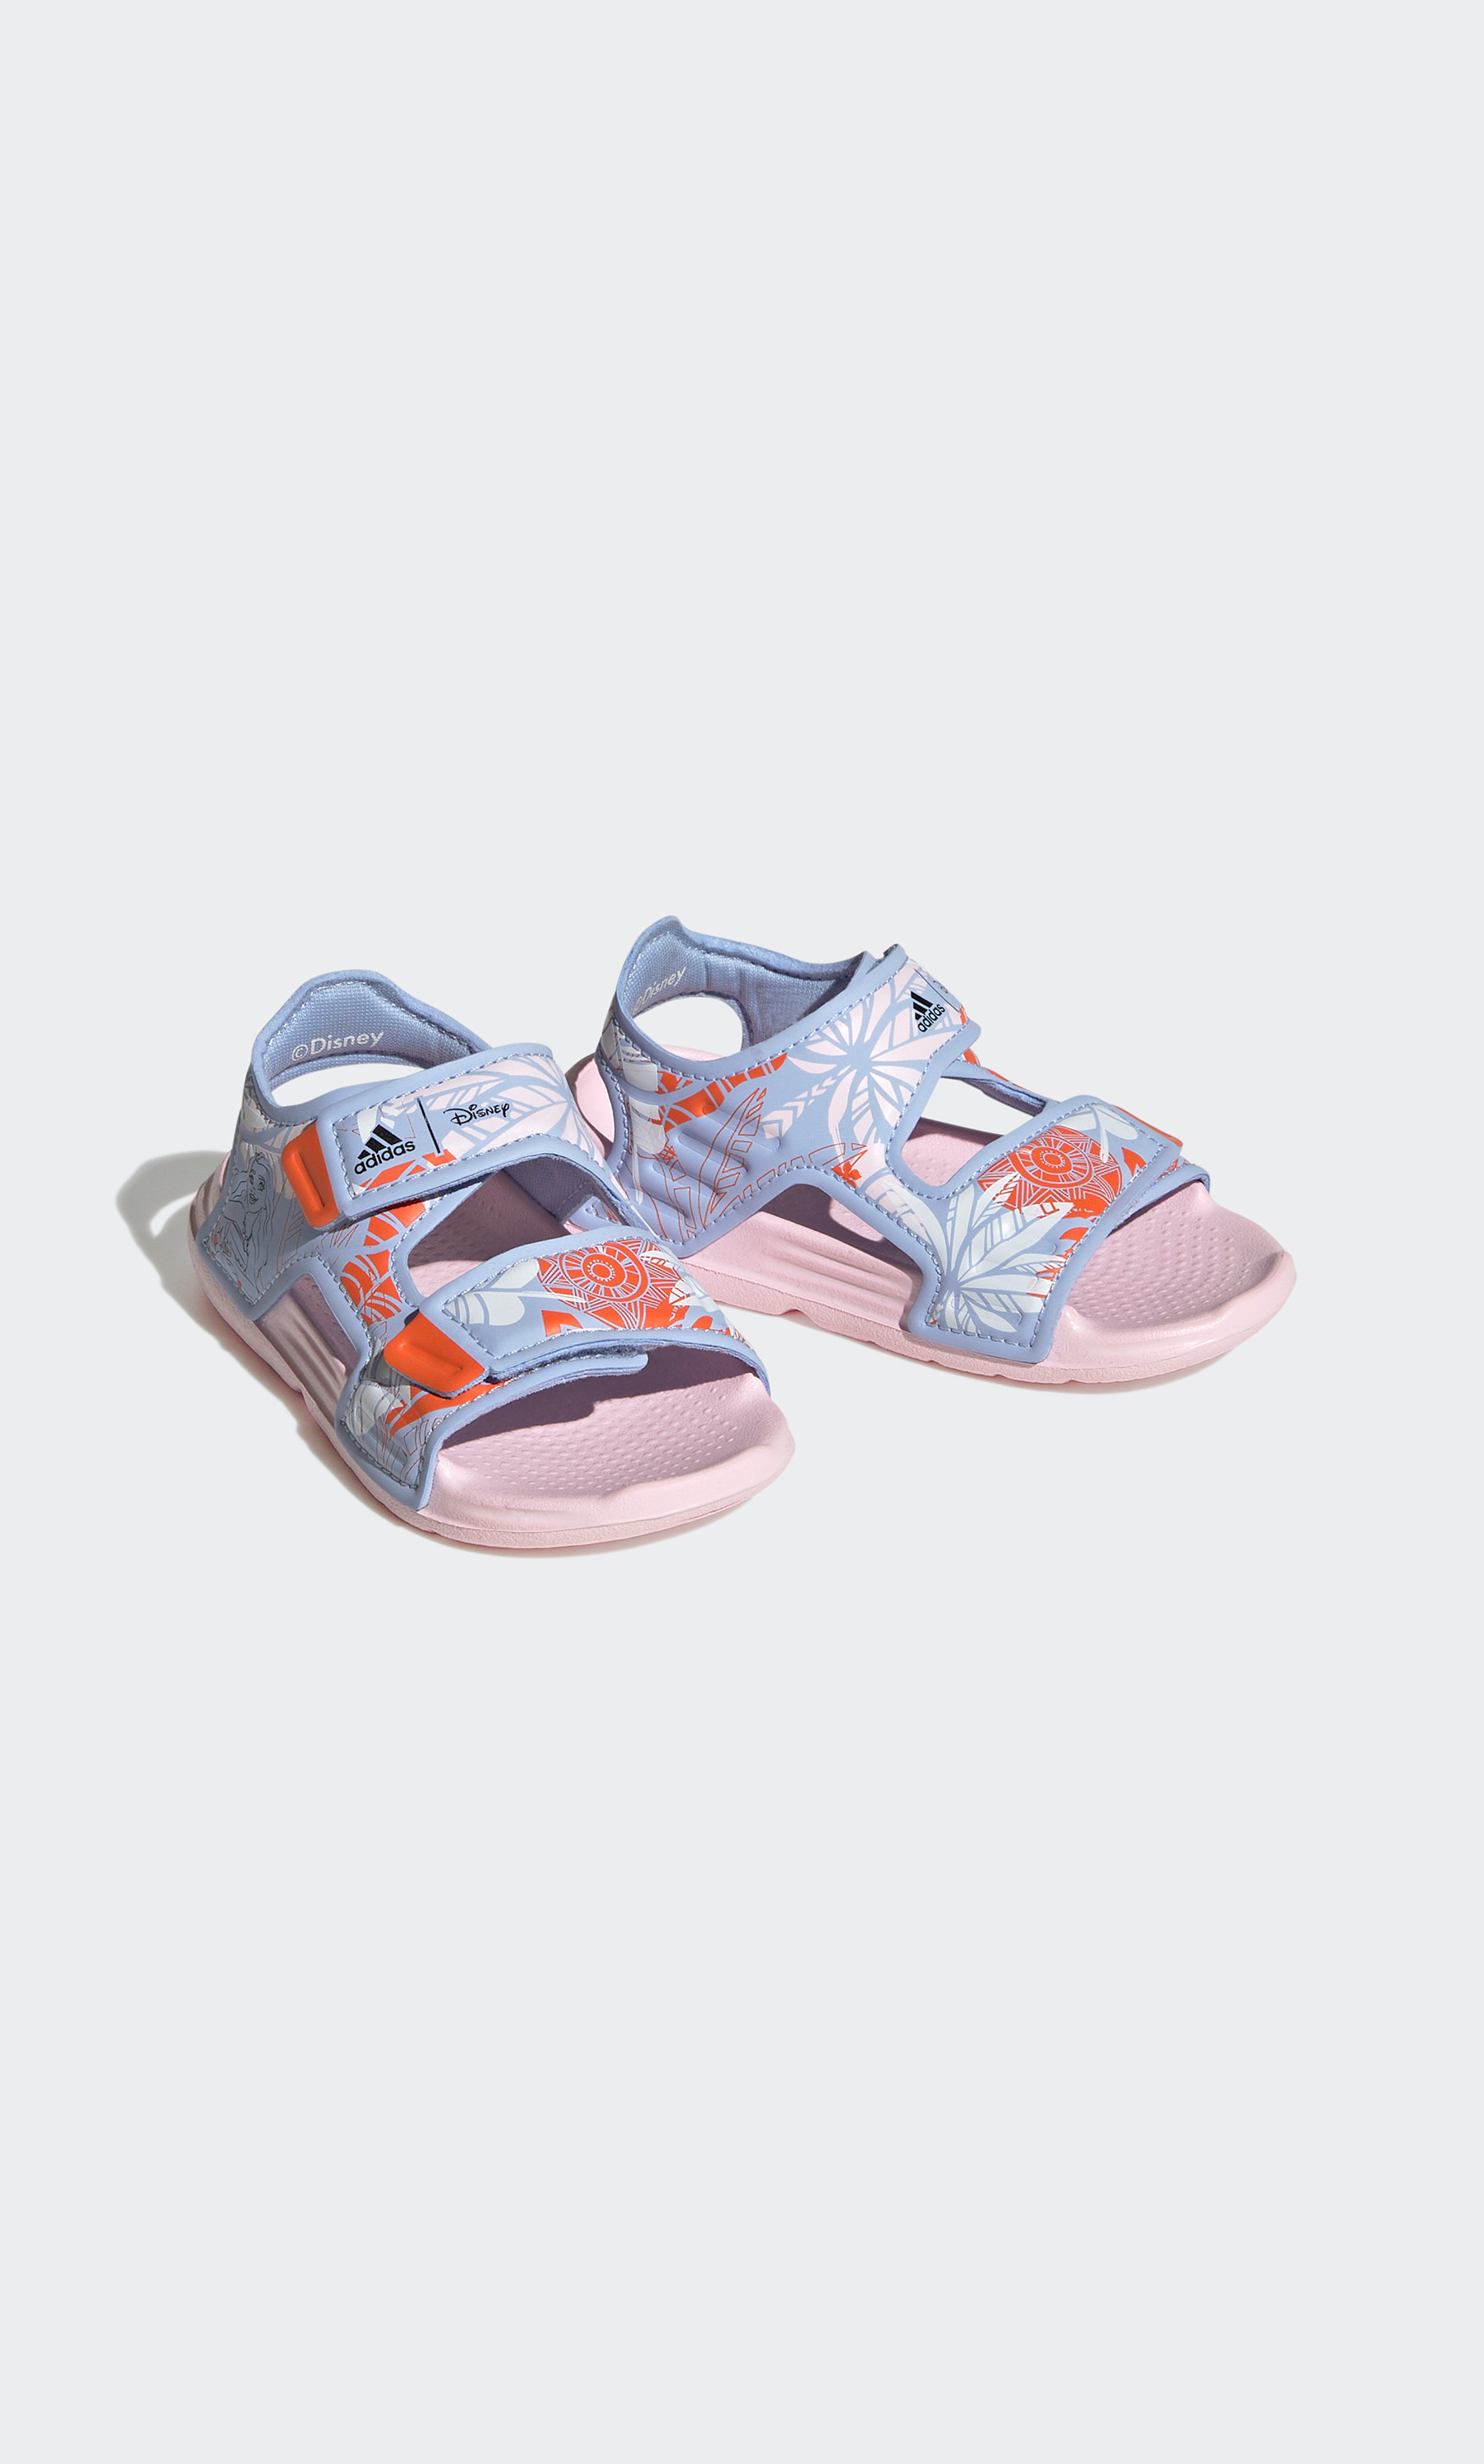 Adidas Altaswim sandals, Babies & Kids, Babies & Kids Fashion on Carousell